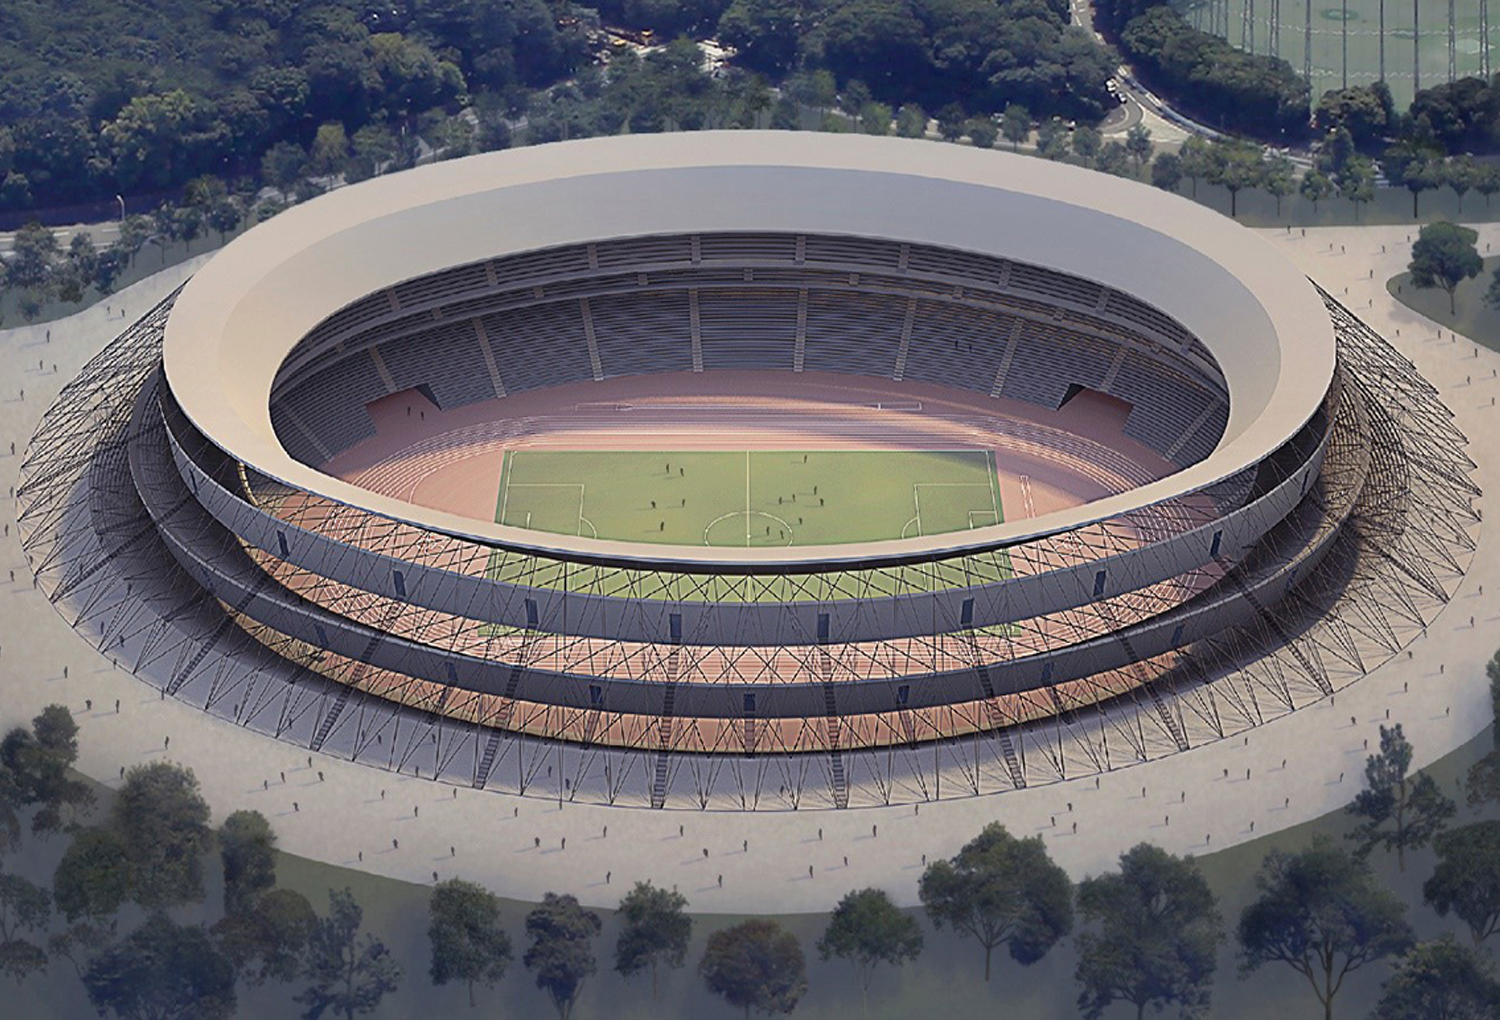 National Stadium Tokyo 2020 - P. D’Acunto, L. Ingold, O. P. Ohlbrock - 2016